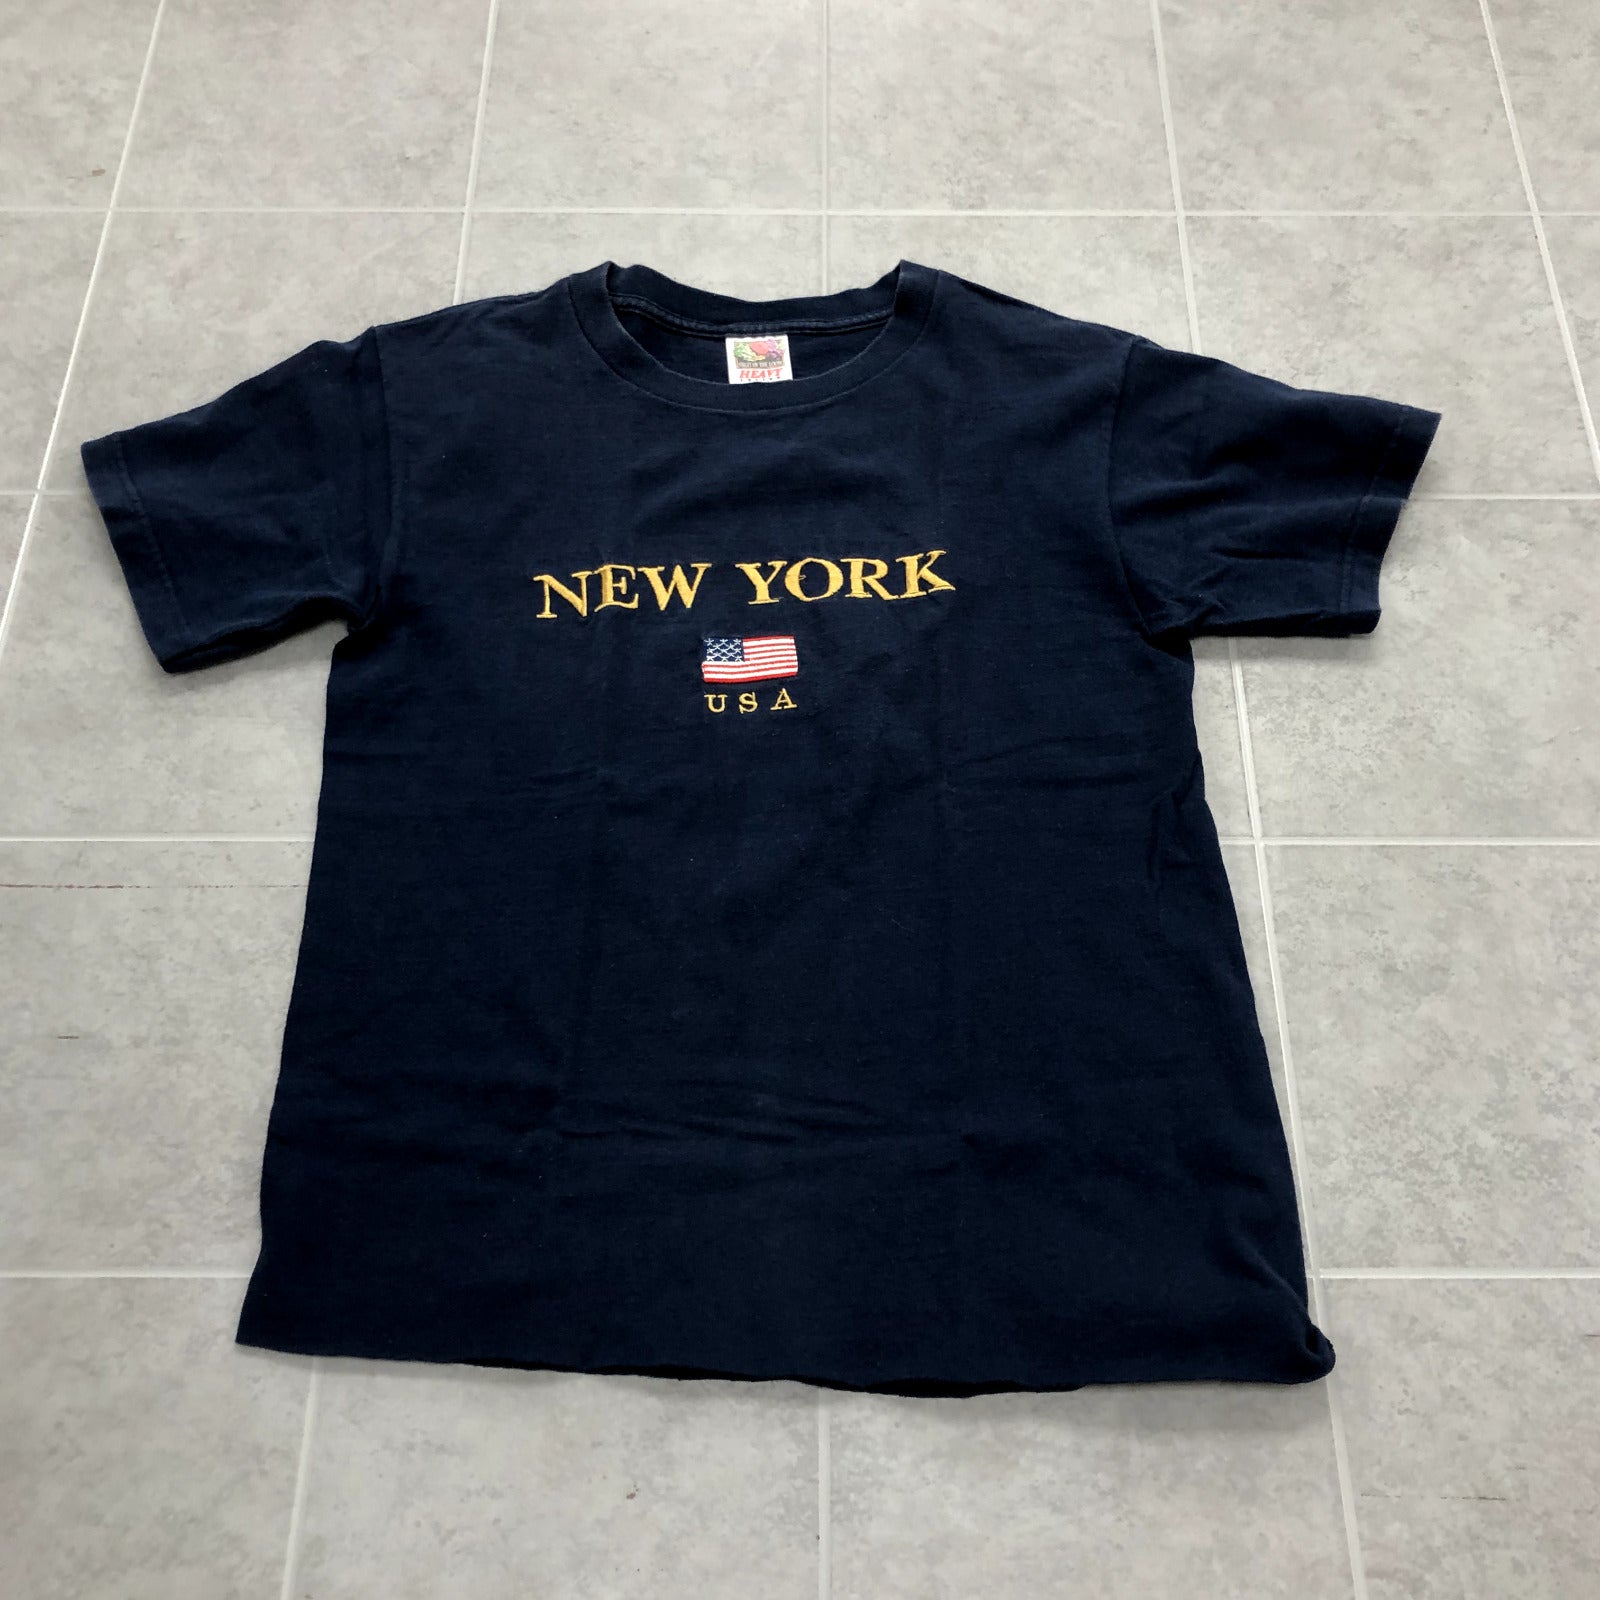 Vintage FOTL Navy Blue Short Sleeve Crew Graphic NEW YORK T-shirt Adult Size S